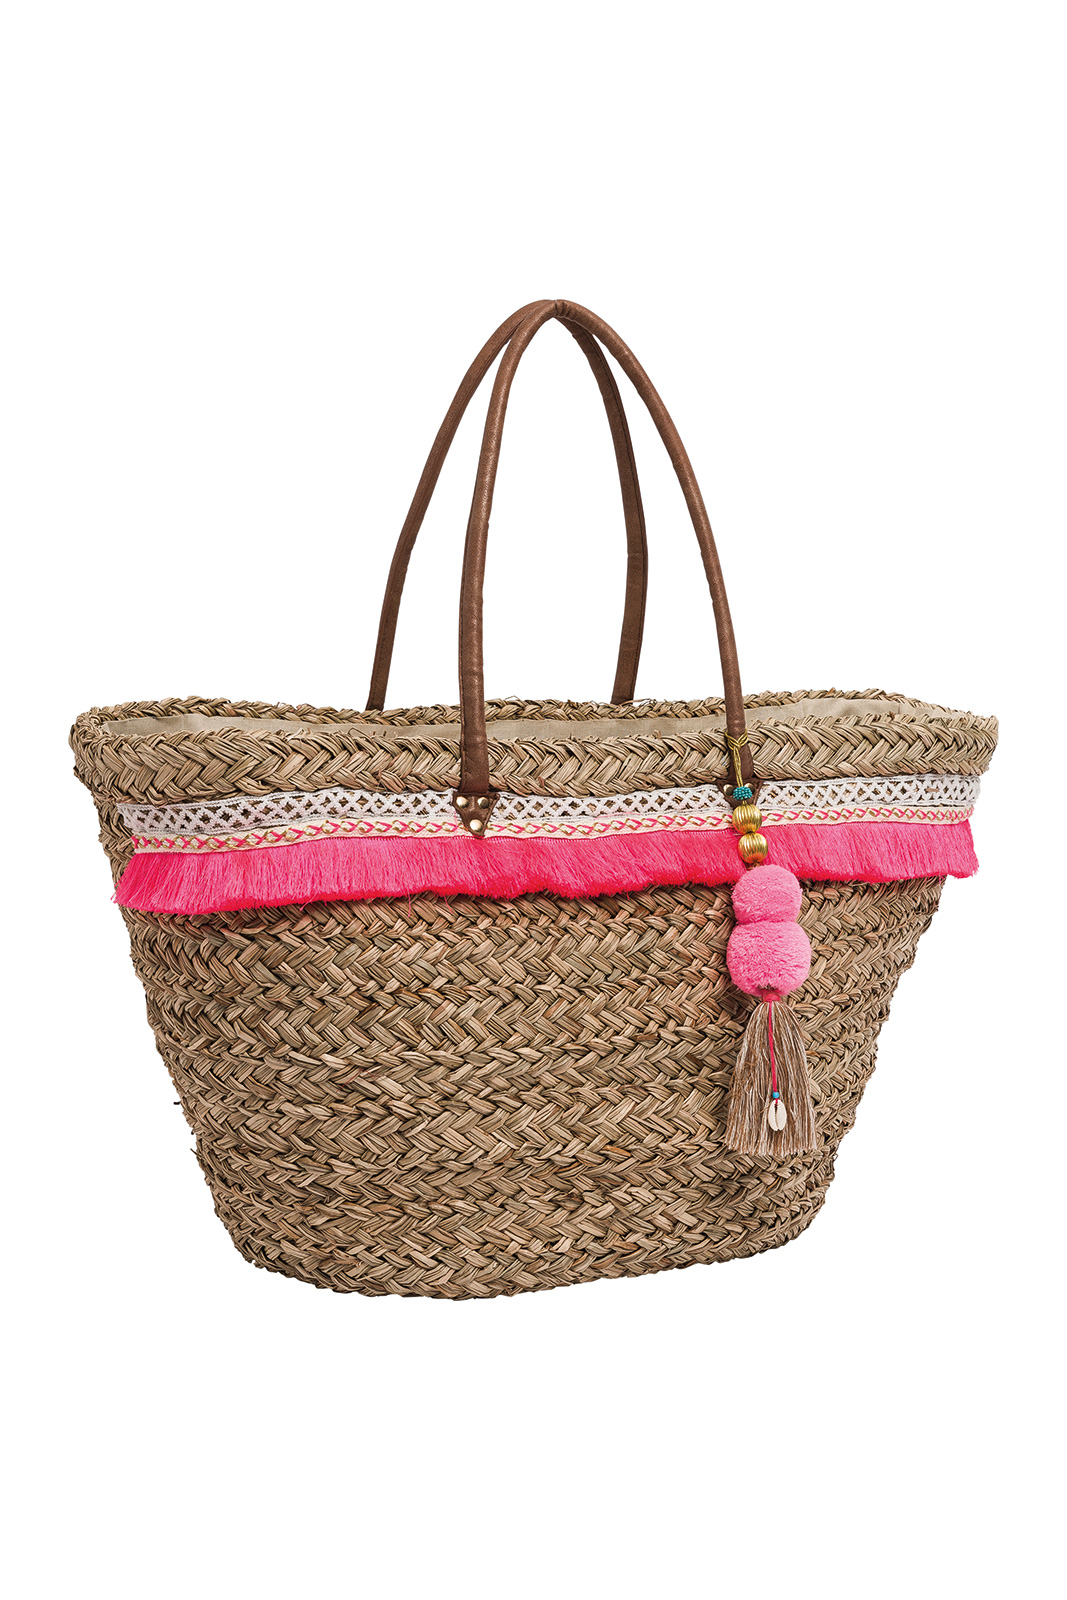 Amenapih Straw Basket Decorated With A Pink Fringe - Rita Pink